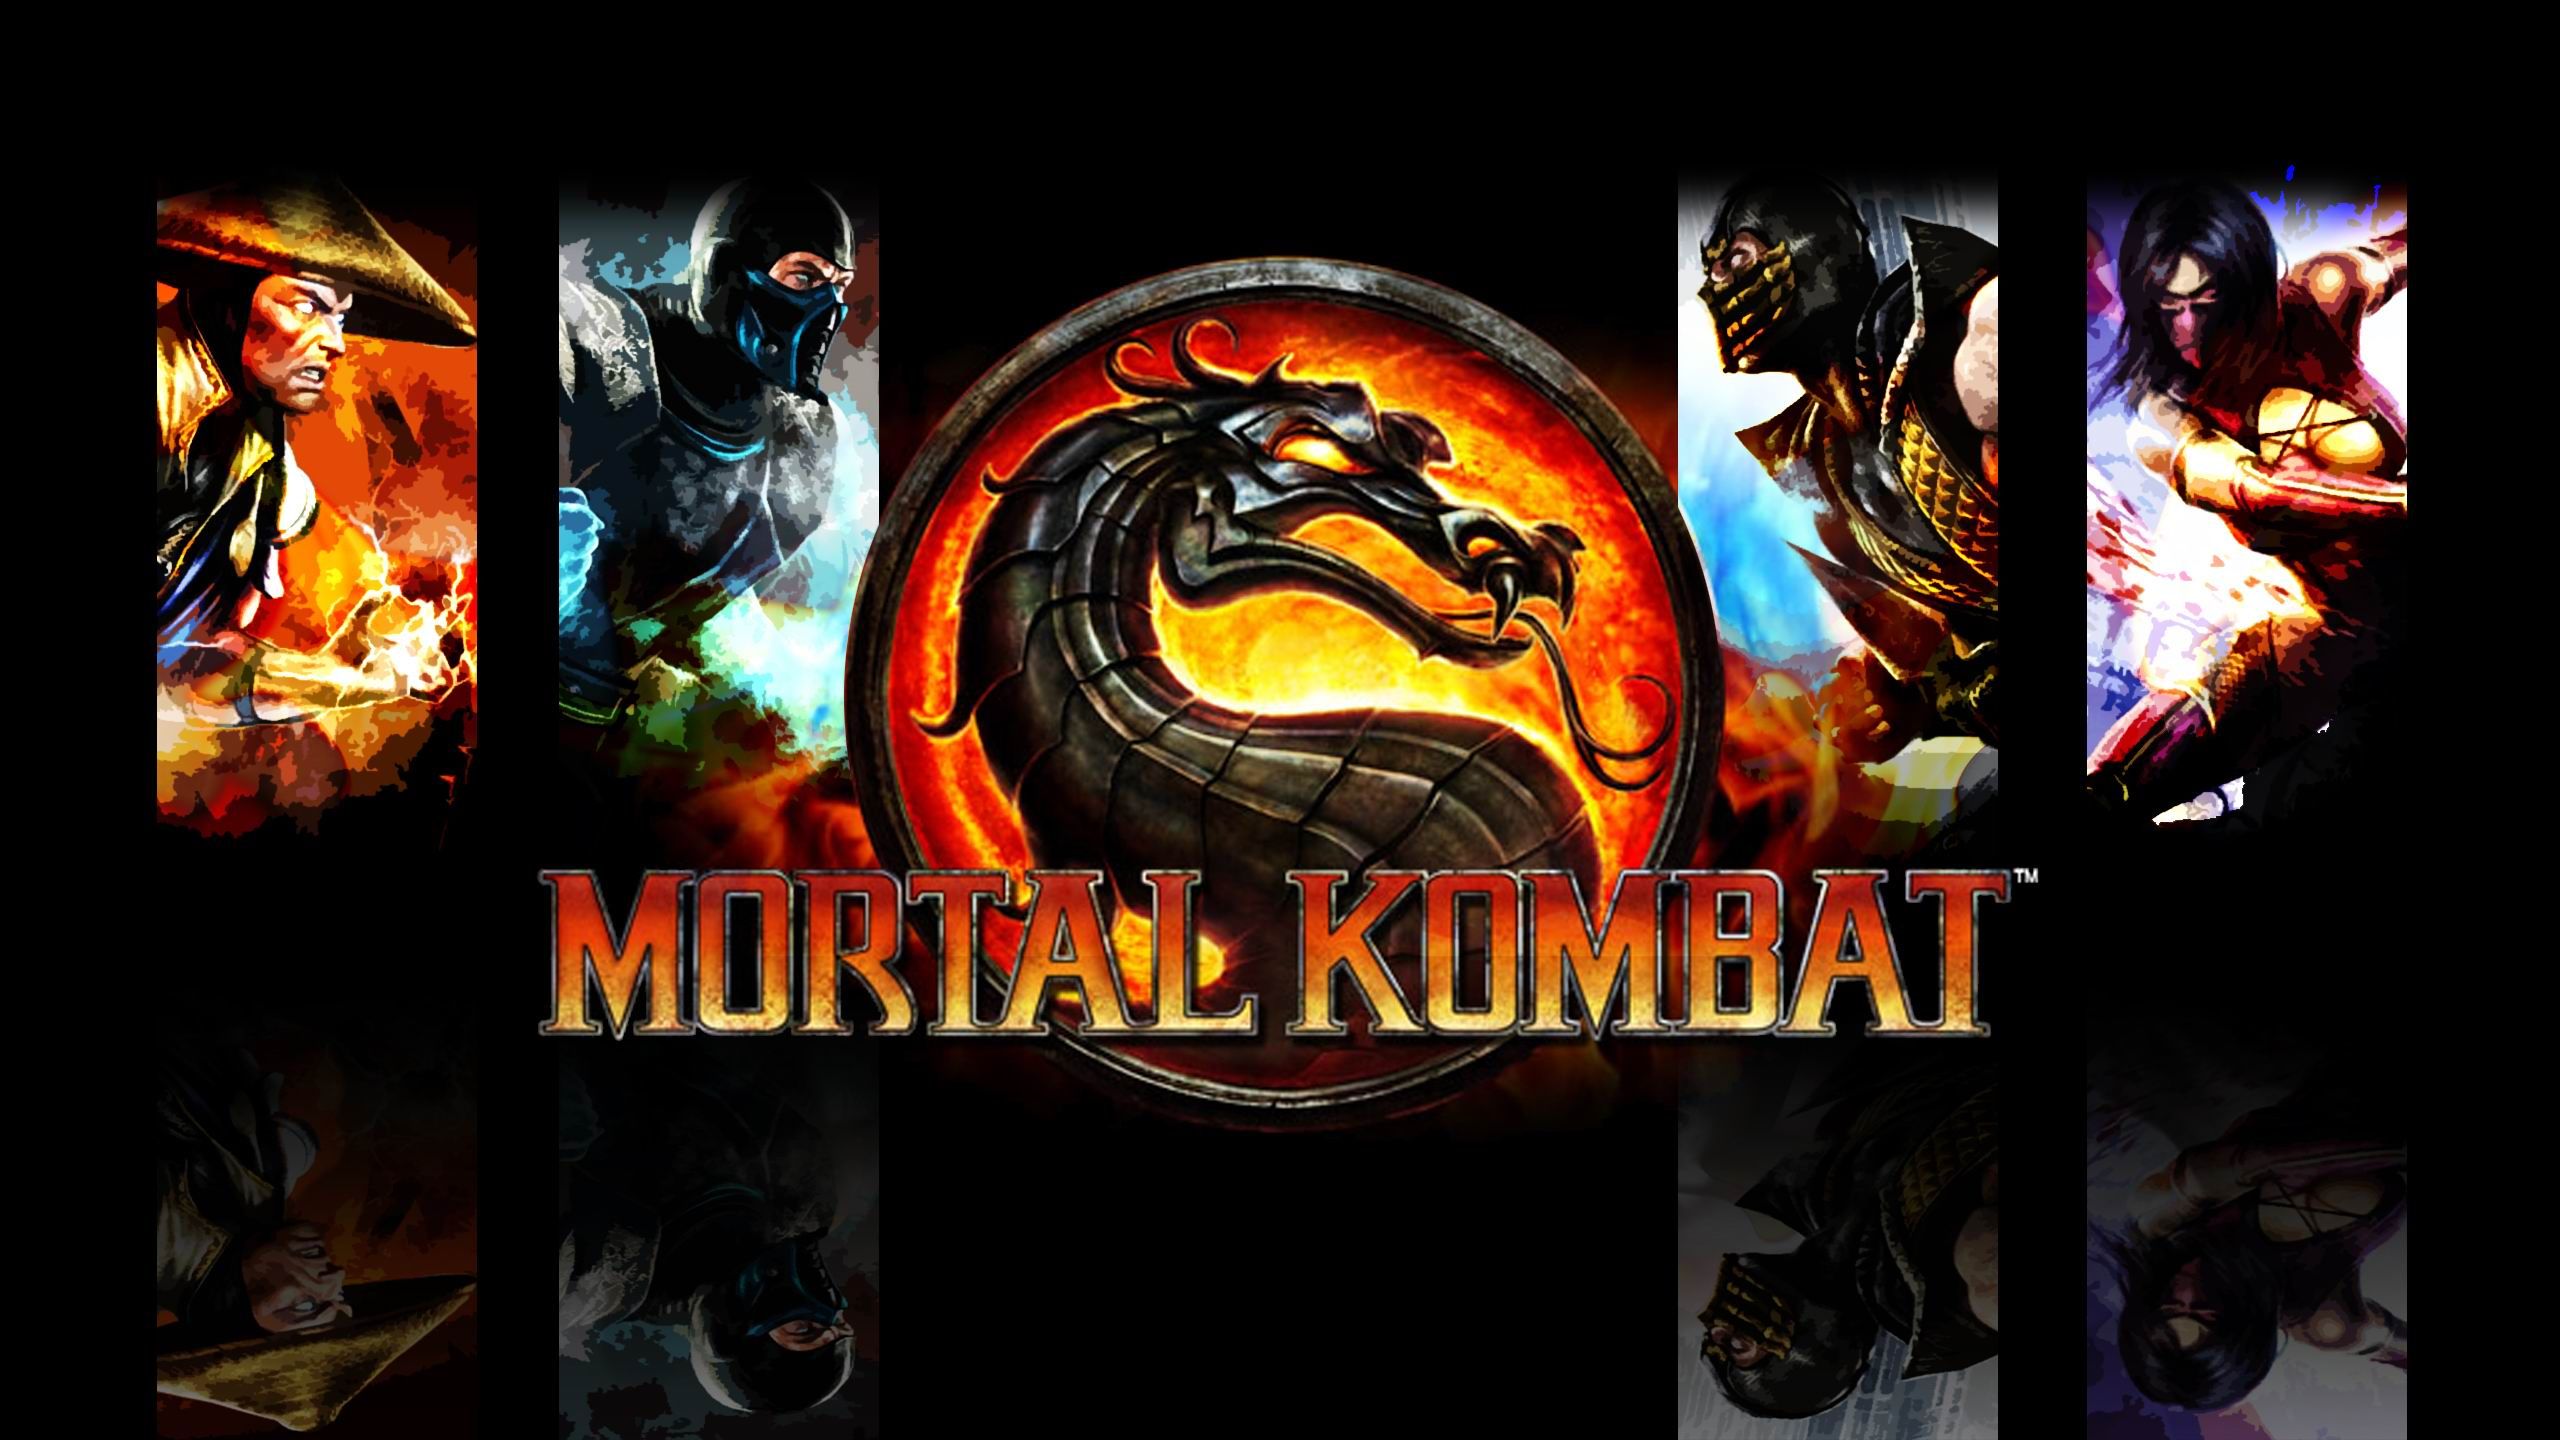 Mortal Kombat wallpaper 164 images pictures download